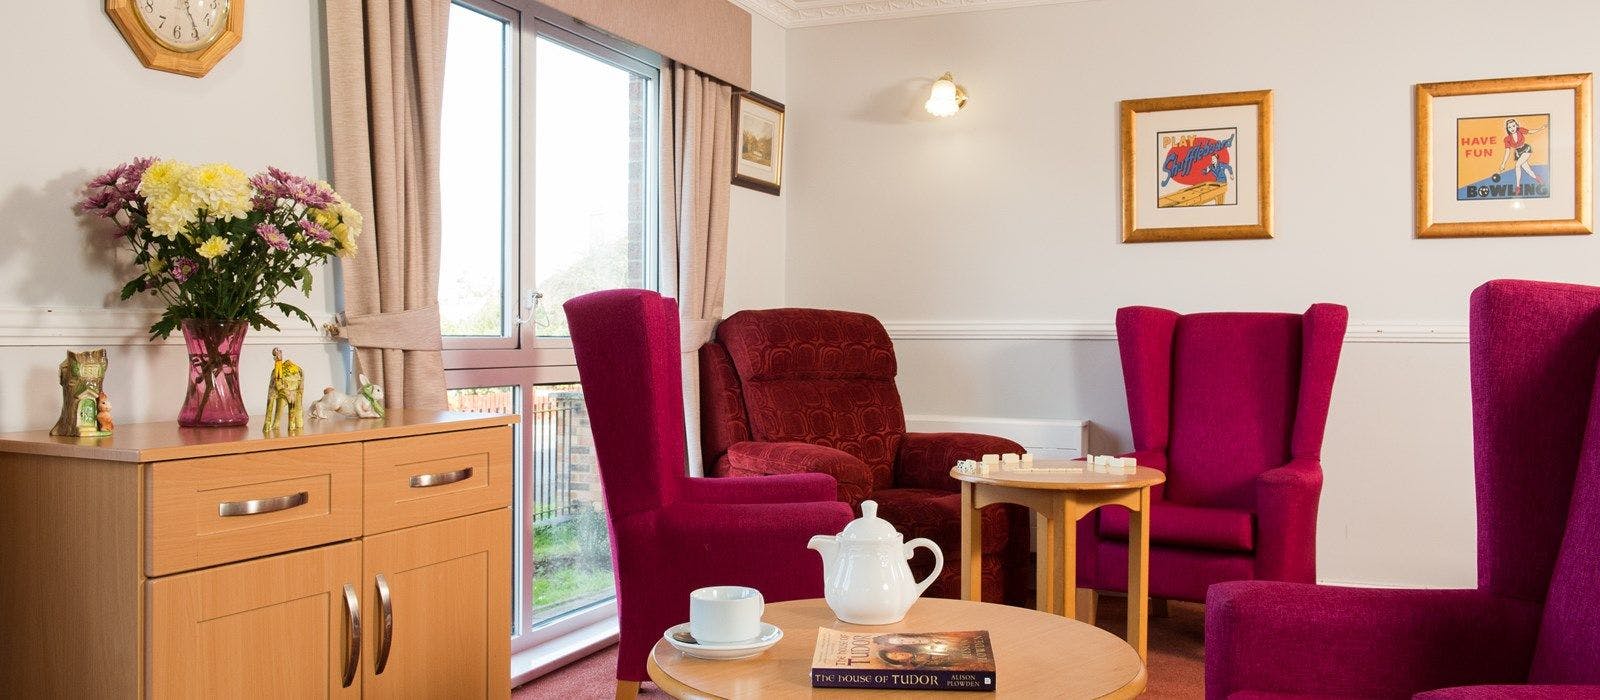 Communal Area of Hillside Lodge Care Home in Berwick-upon-Tweed, Northumberland 